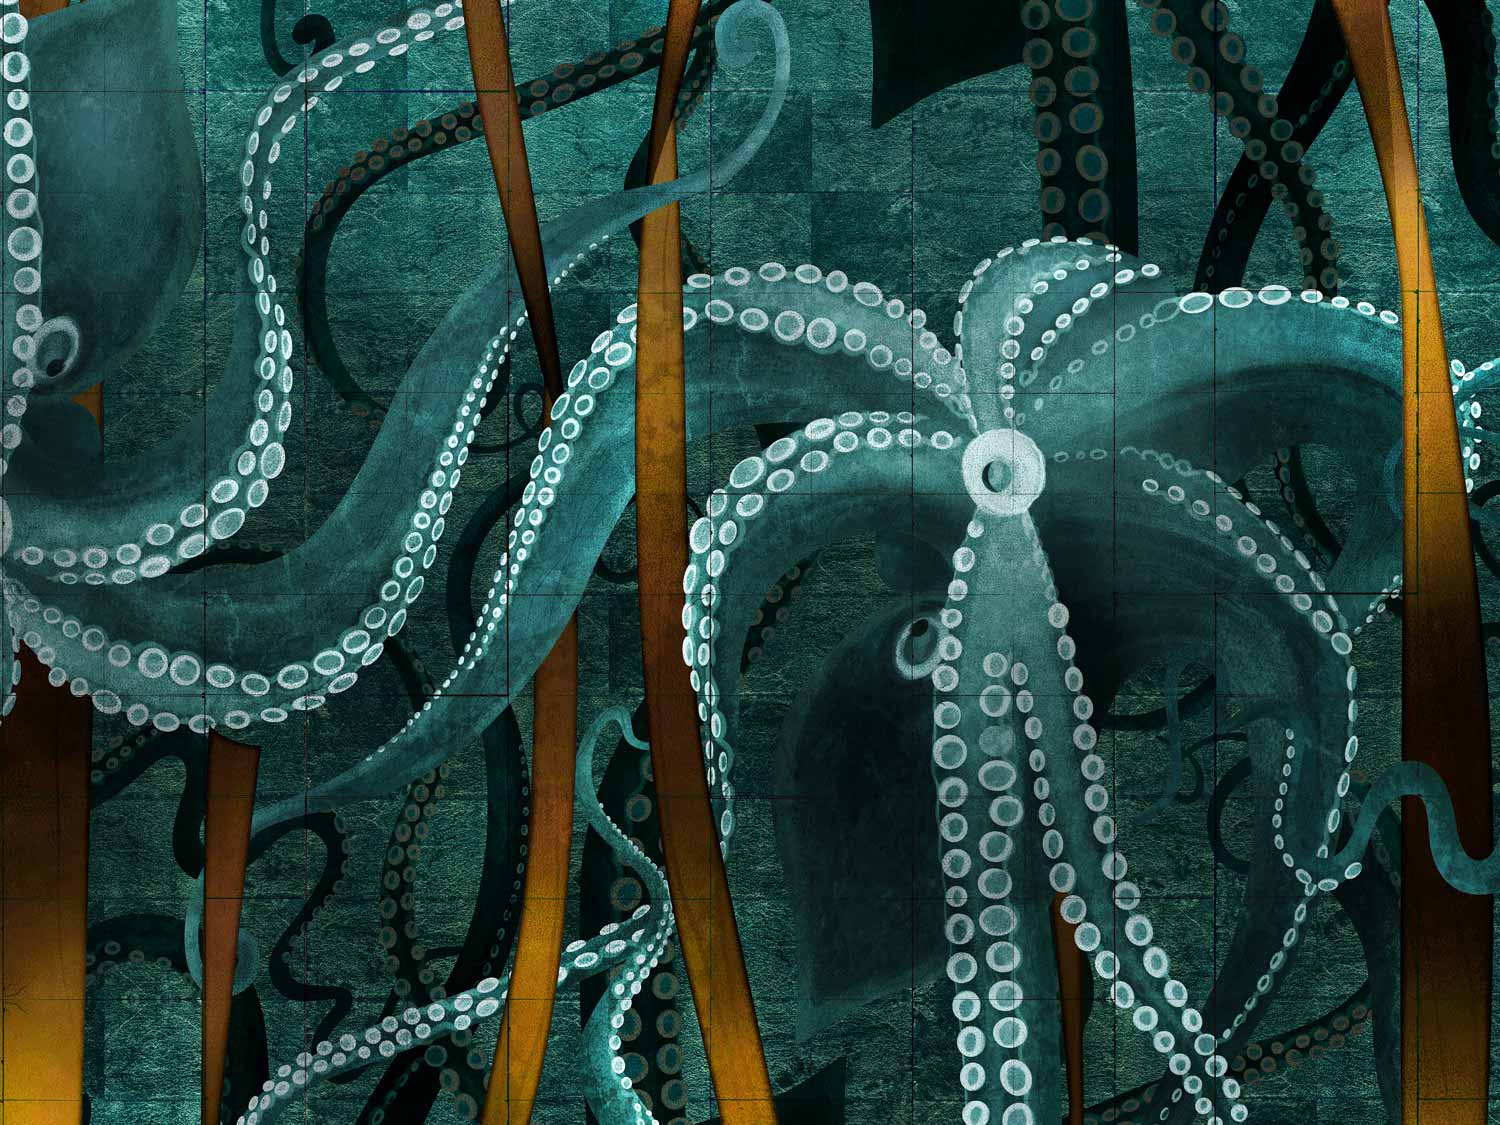 Kraken in Deep Ocean colourway detail